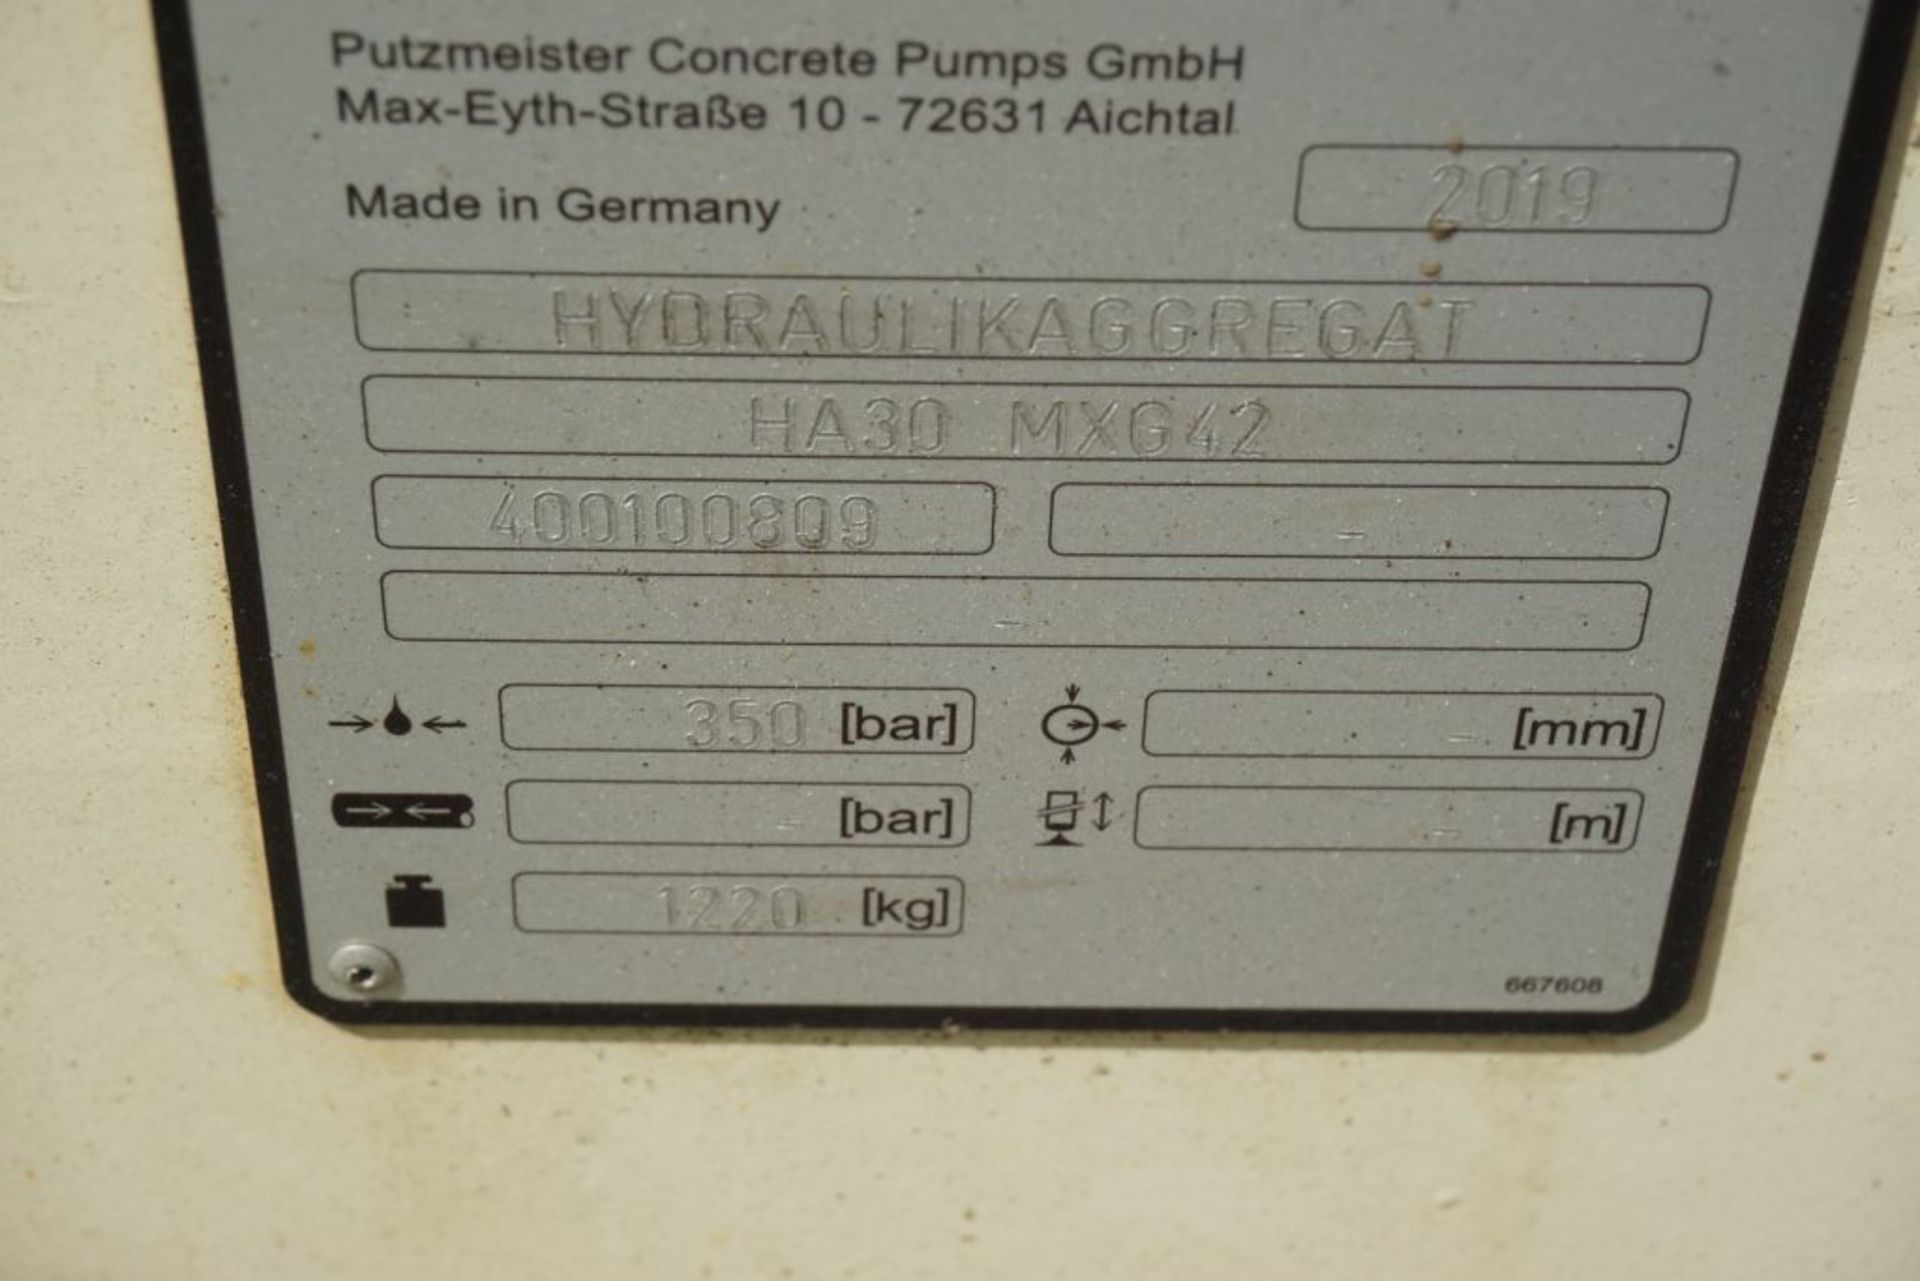 2019 Putzmeister Hydraulic Power Pack - Model No. HA 30 MXG42; Serial No. 400100809; 350 Bar; 1220 - Image 22 of 23